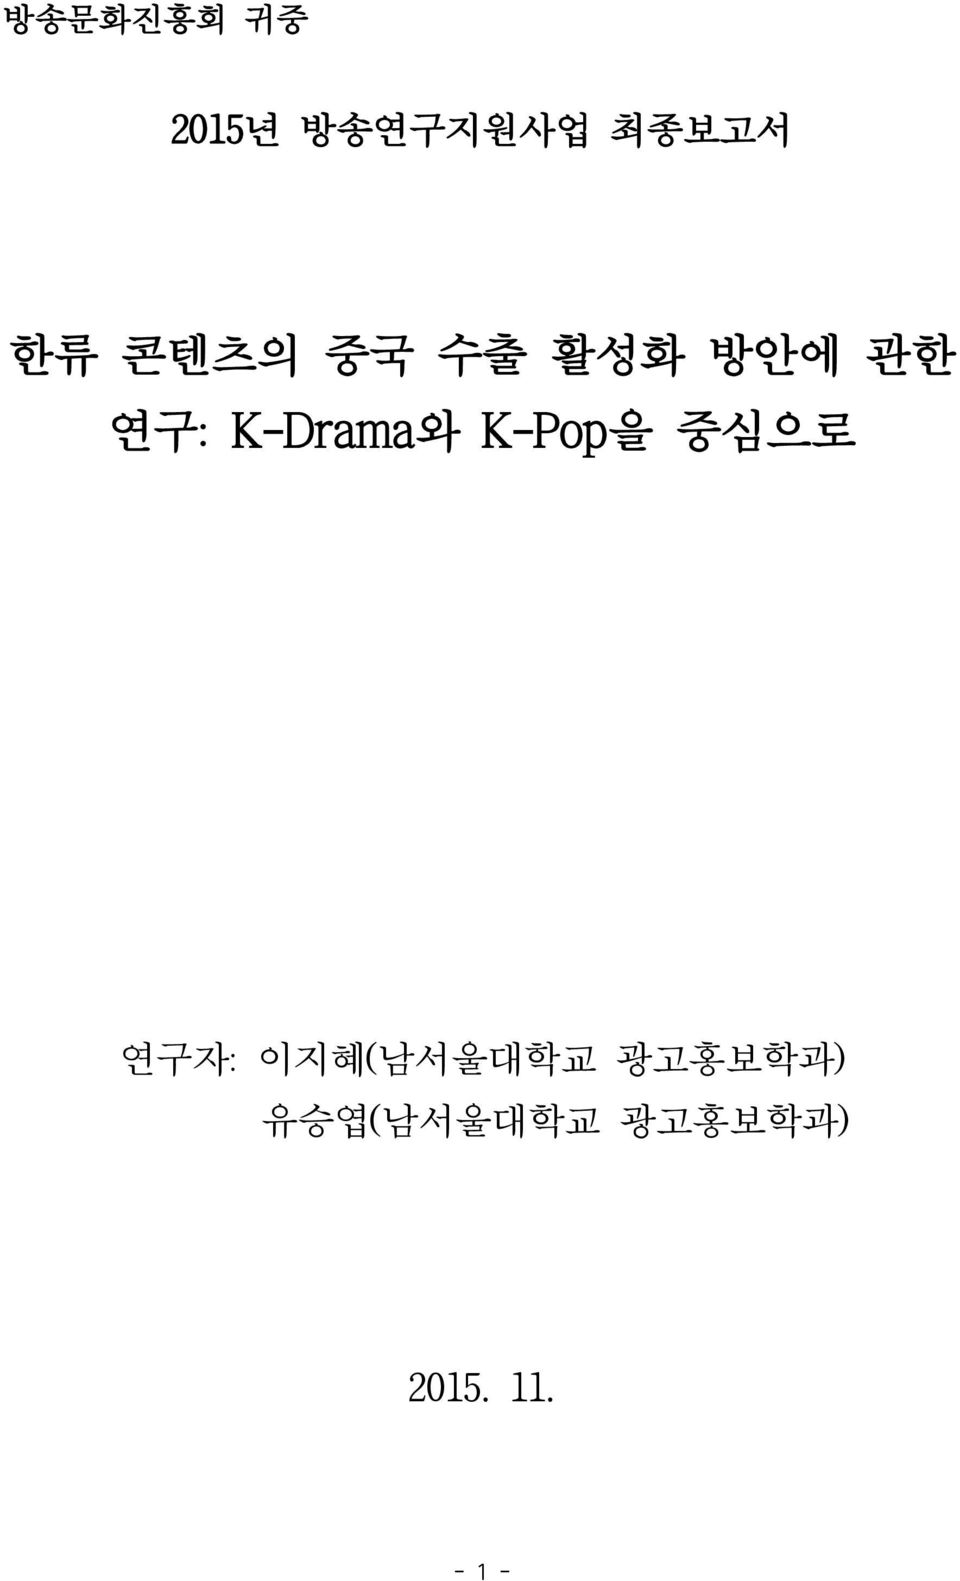 K-Pop을 중심으로 연구자: 이지혜(남서울대학교